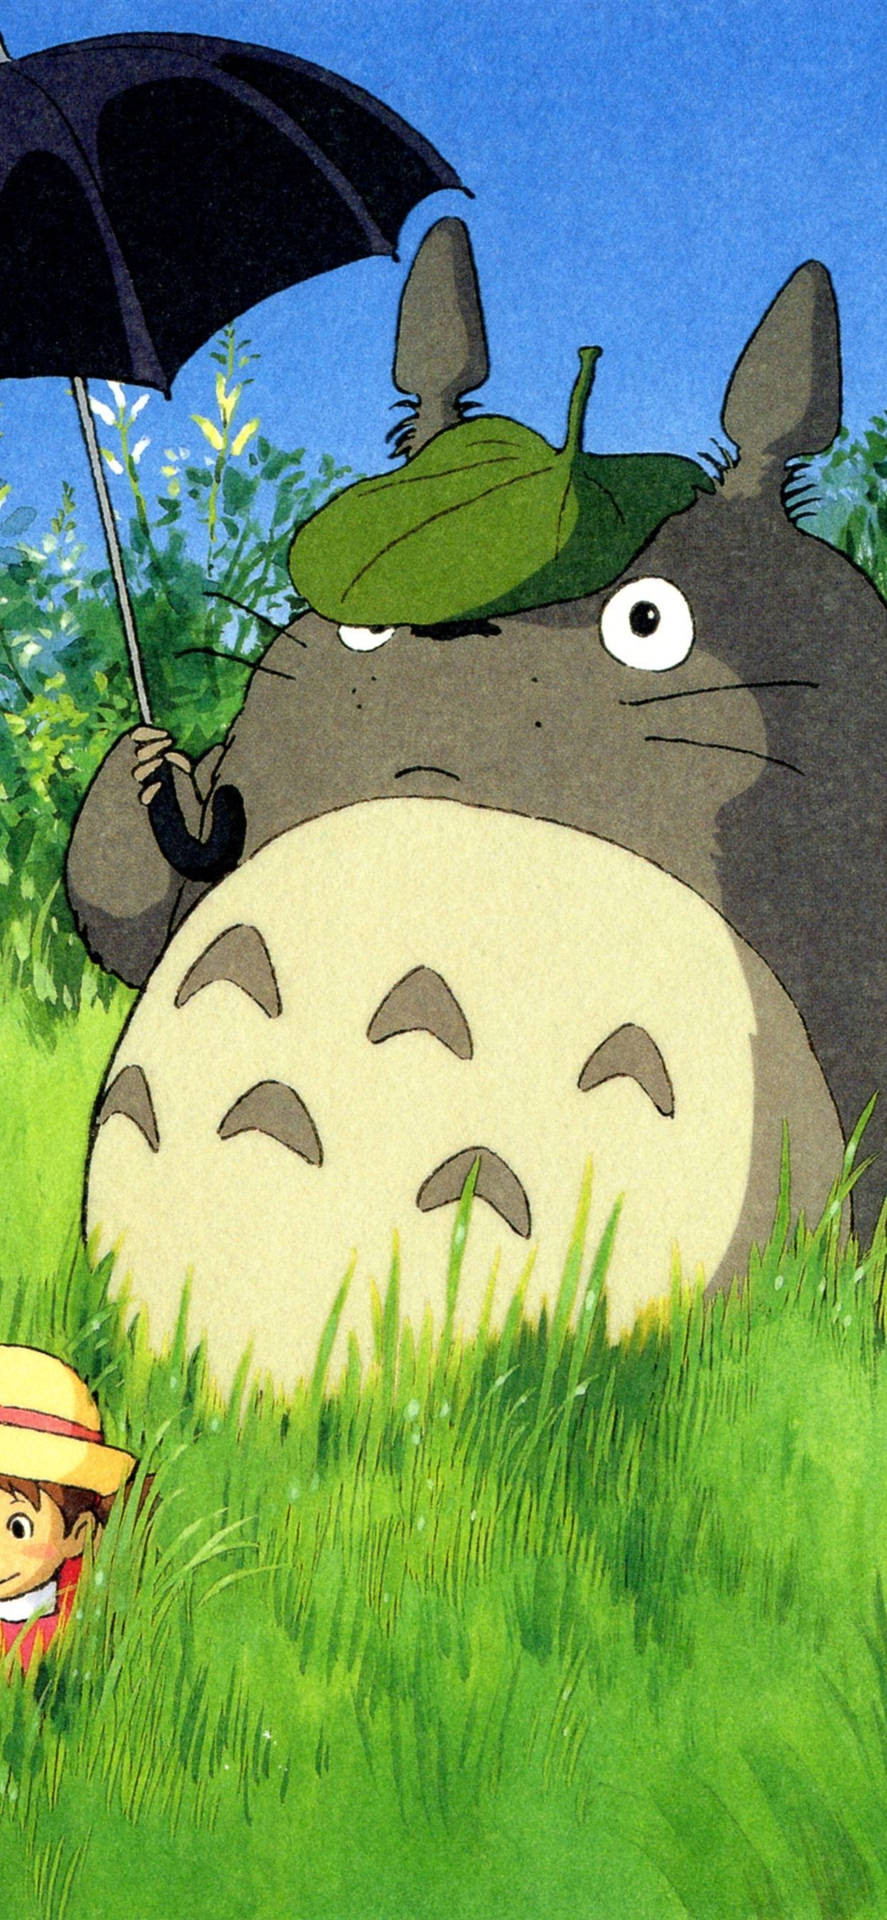 Nyd klassiske Studio Ghibli-film på din telefon. Wallpaper